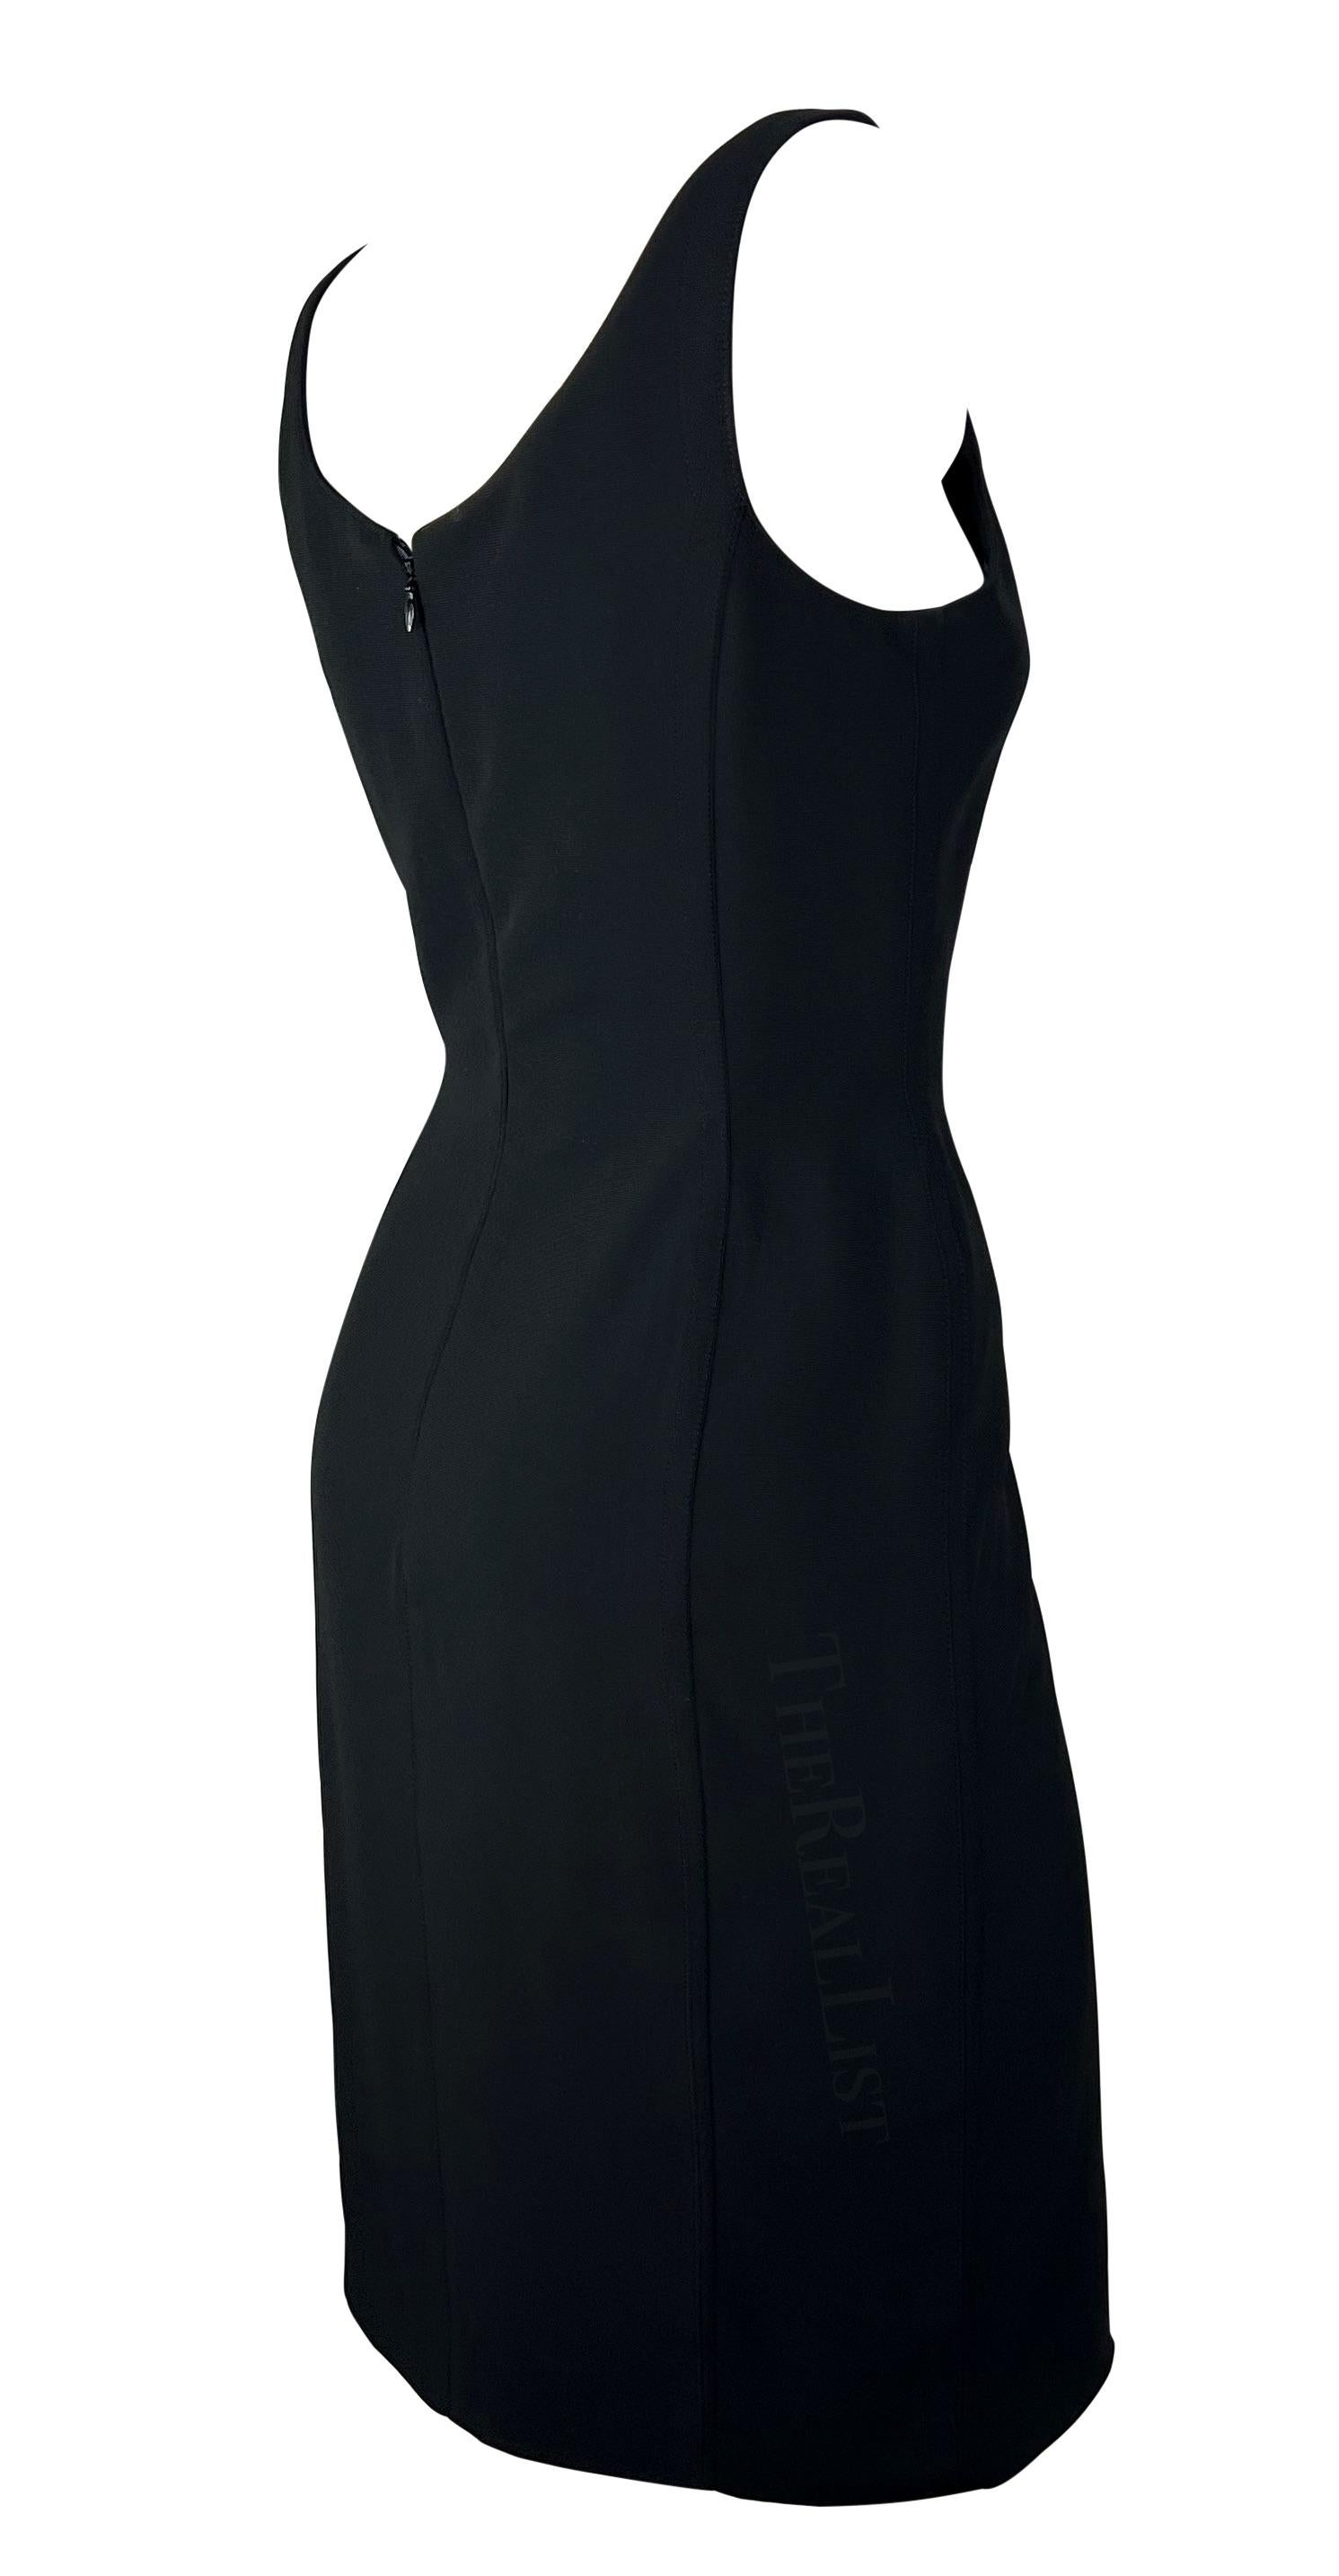 S/S 1999 Thierry Mugler Mesh Panel Little Black Dress For Sale 1